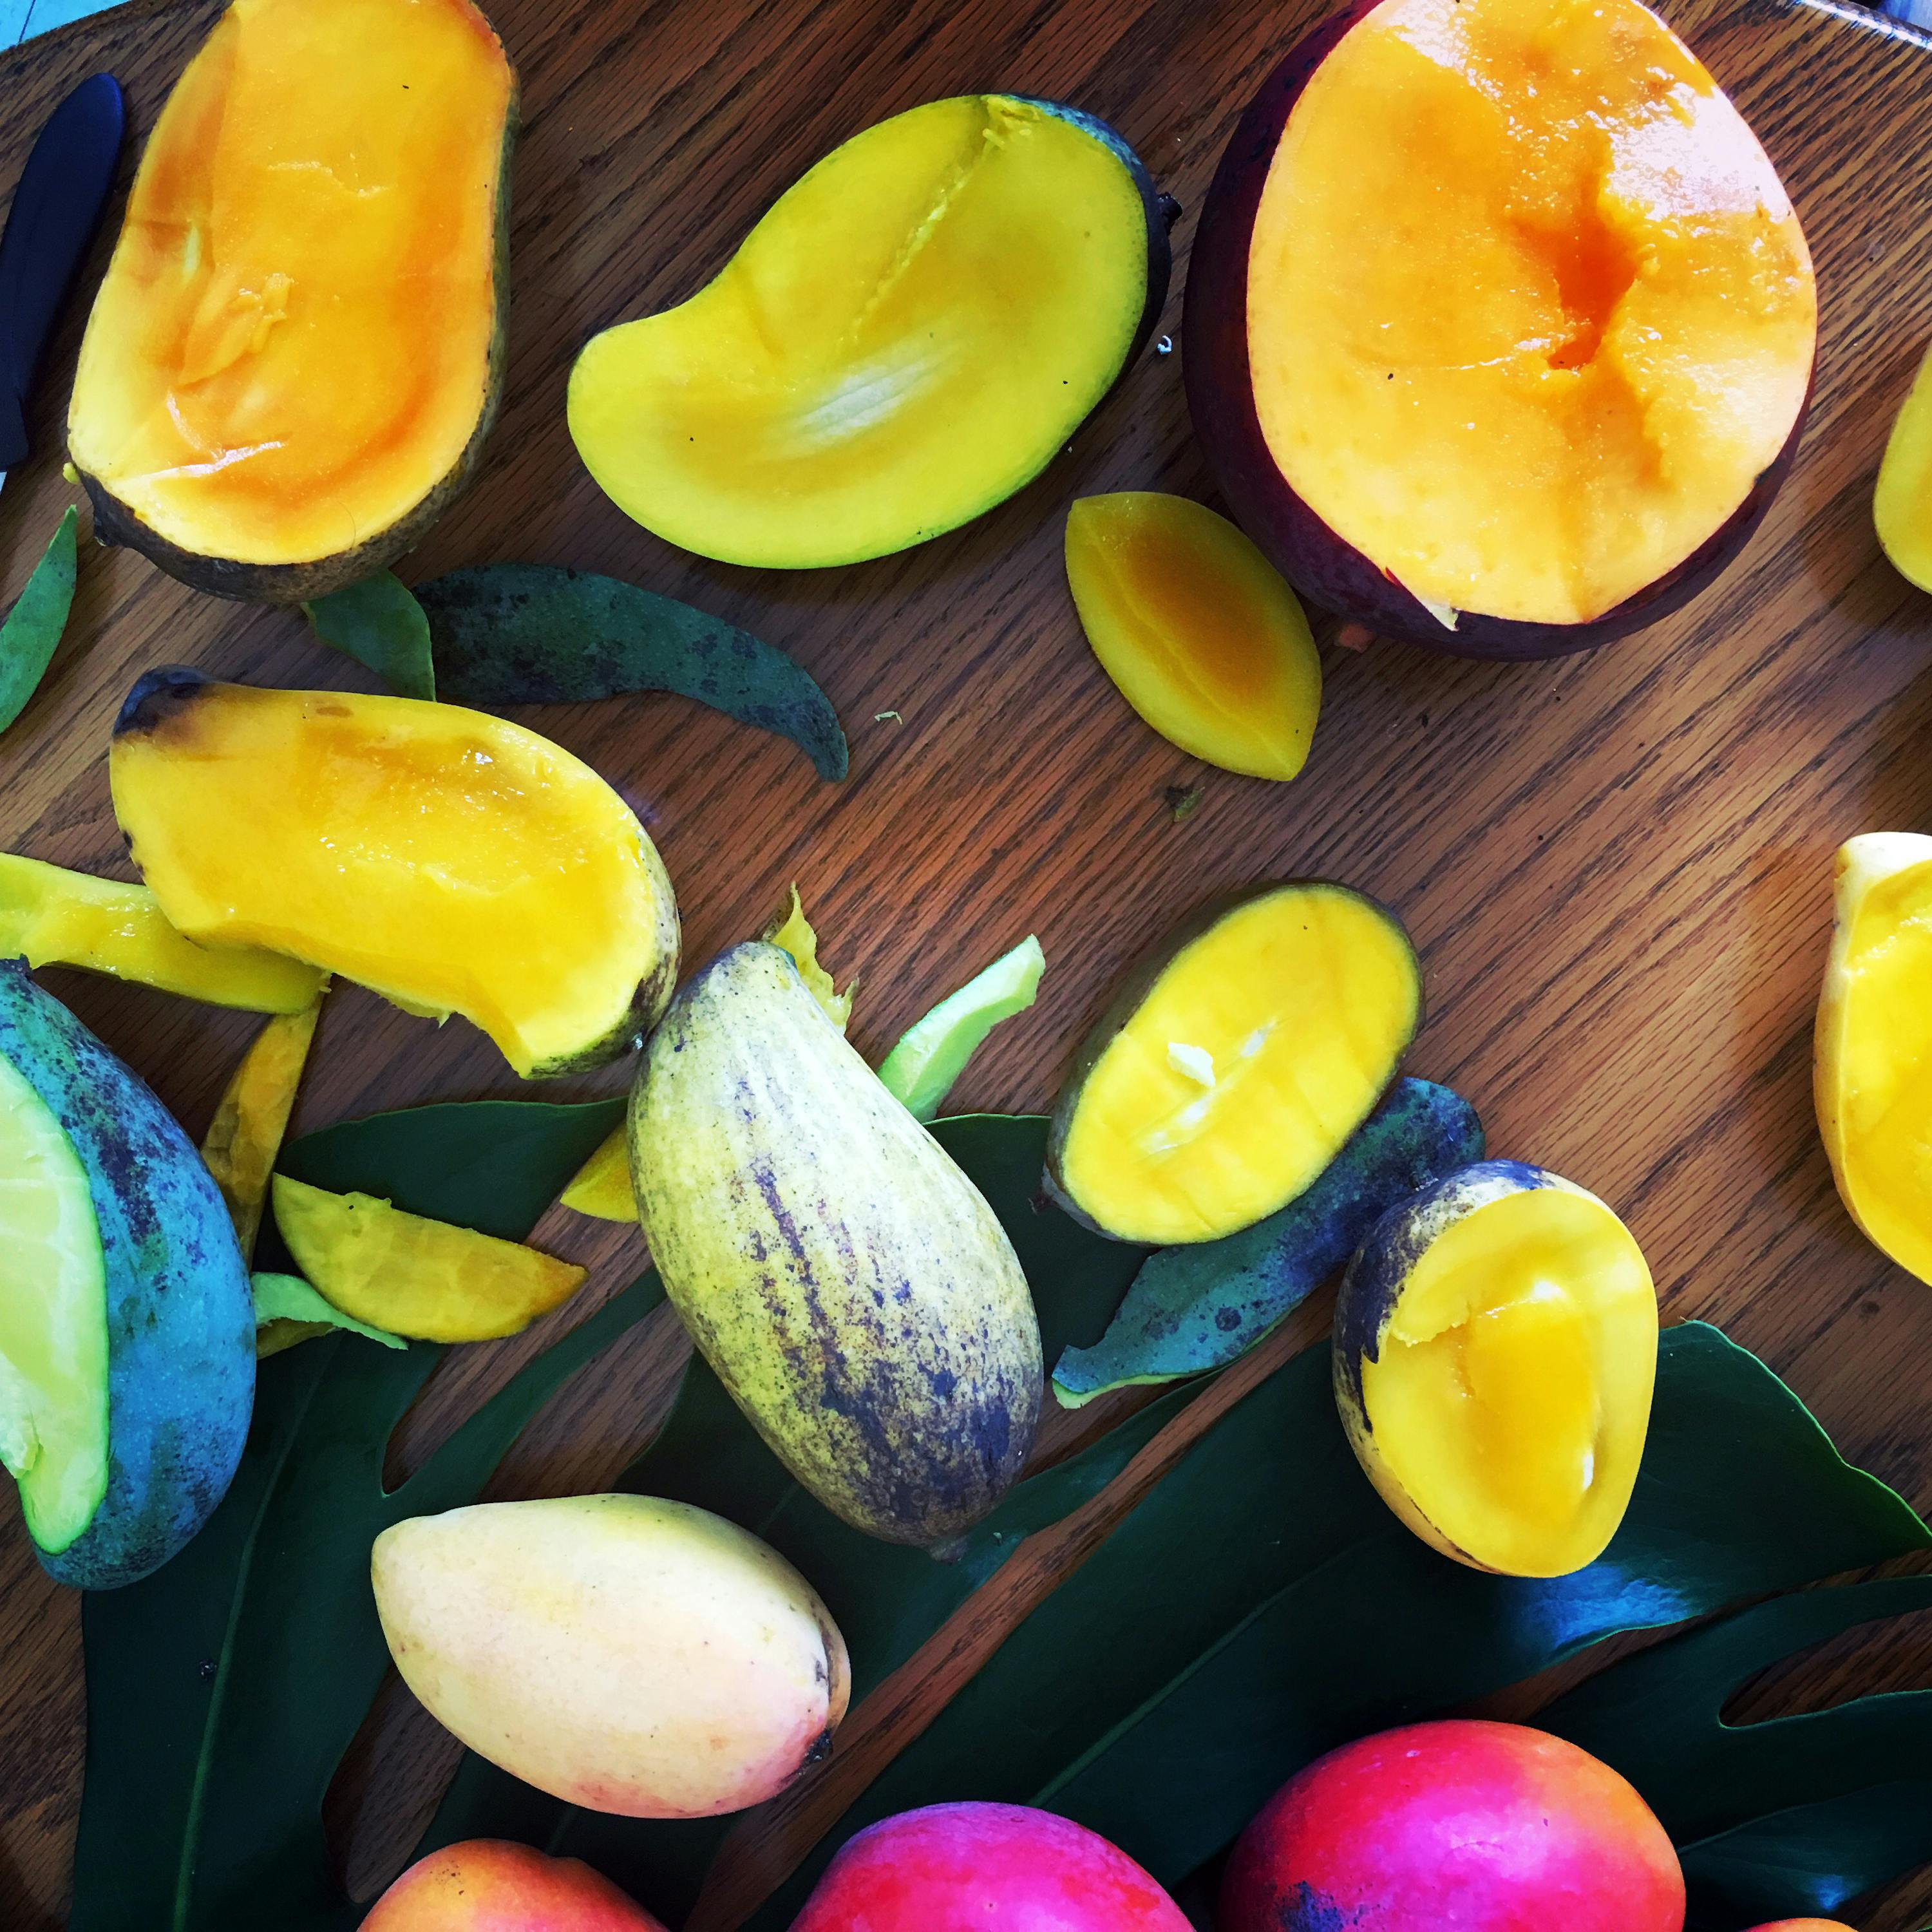 Why American Mangos Are Tasteless